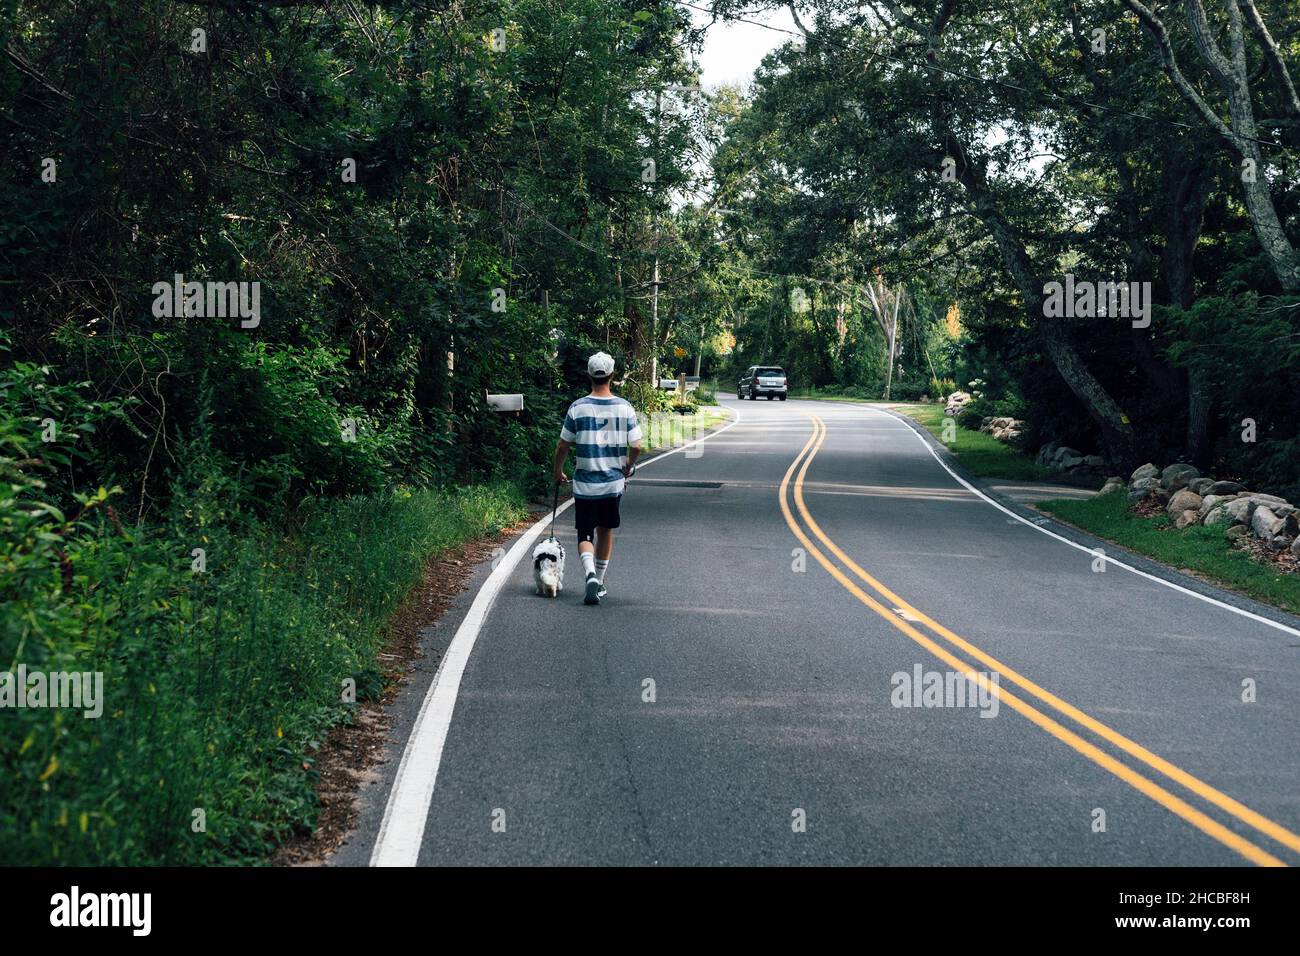 Man walking with Cavapoo dog on road Stock Photo